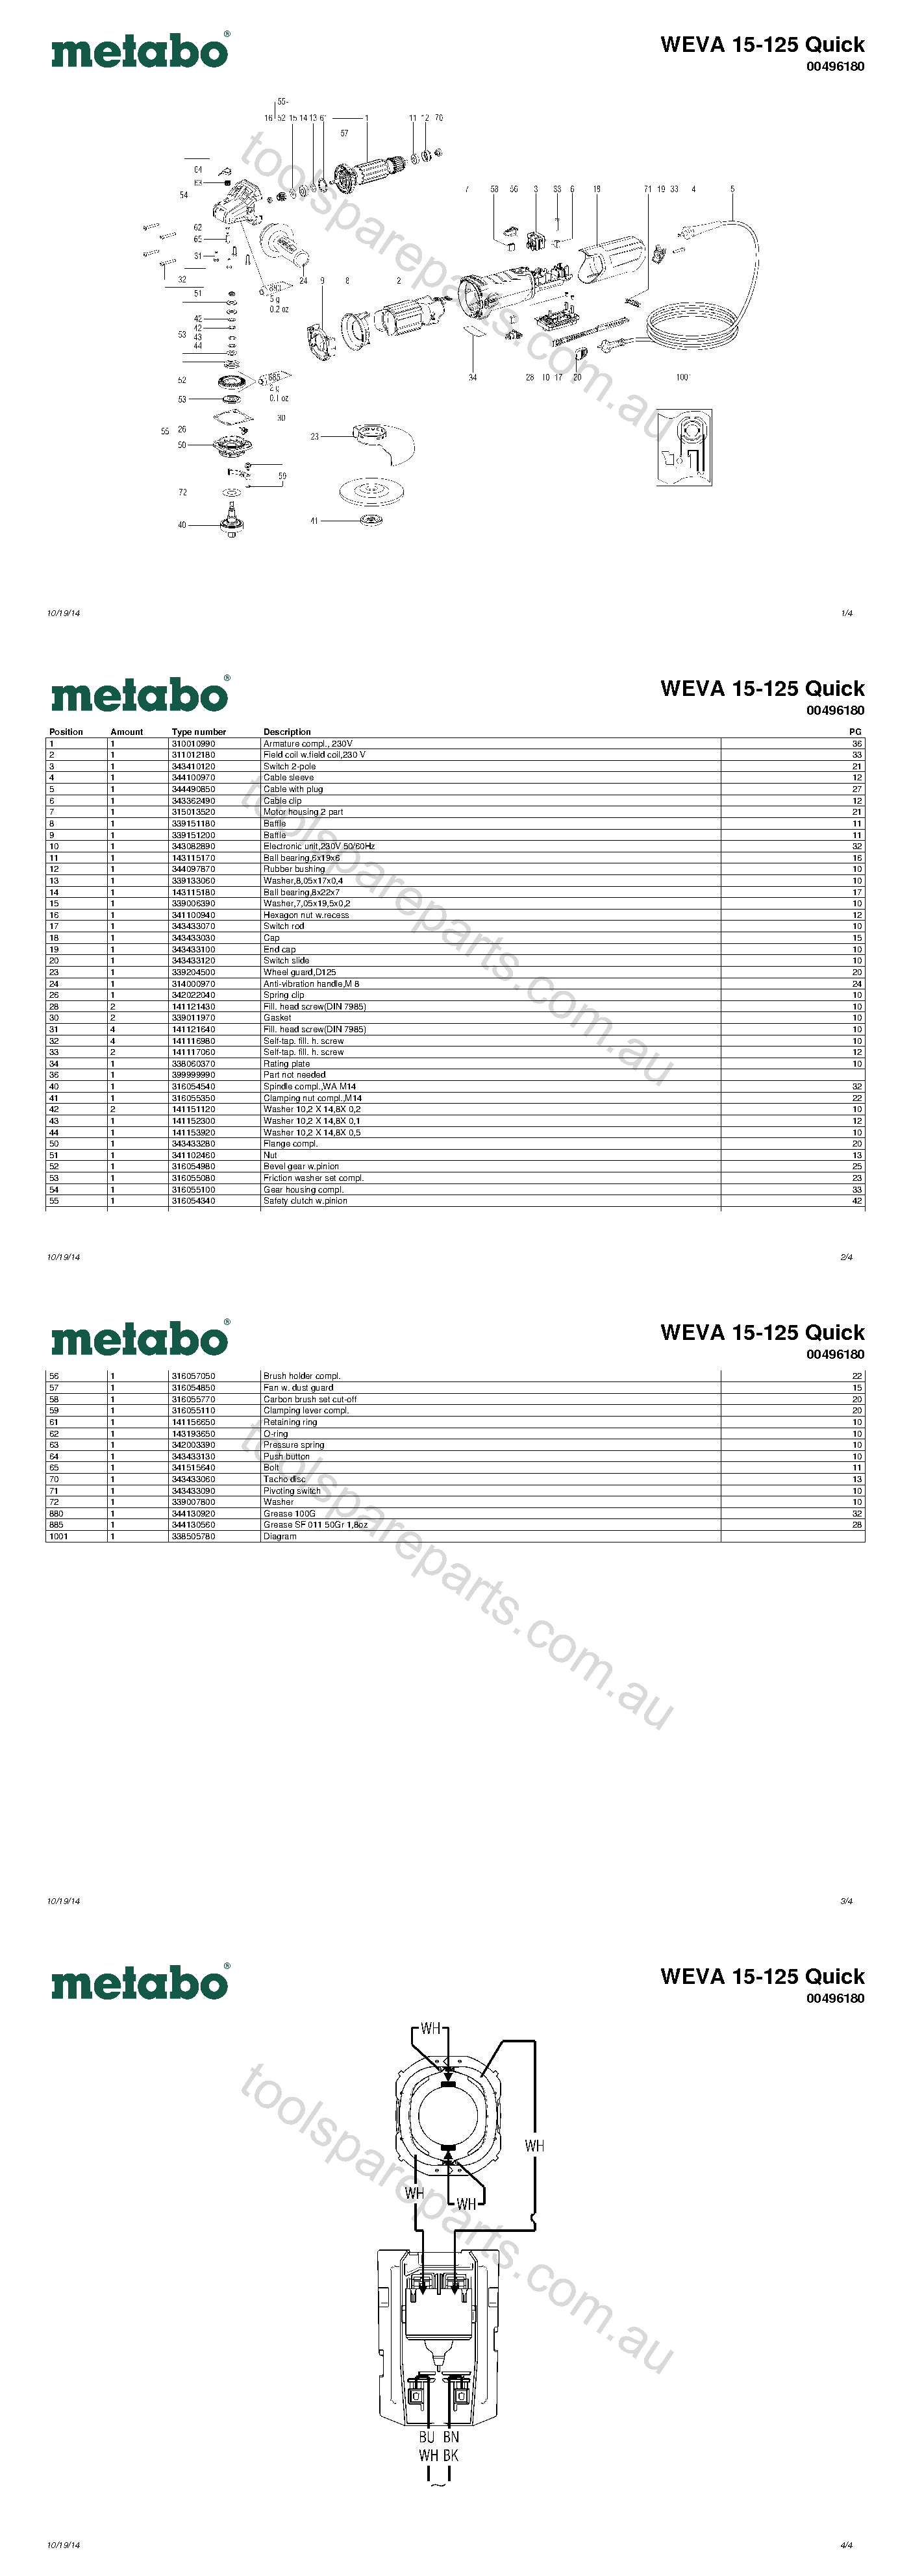 Metabo WEVA 15-125 Quick 00496180  Diagram 1